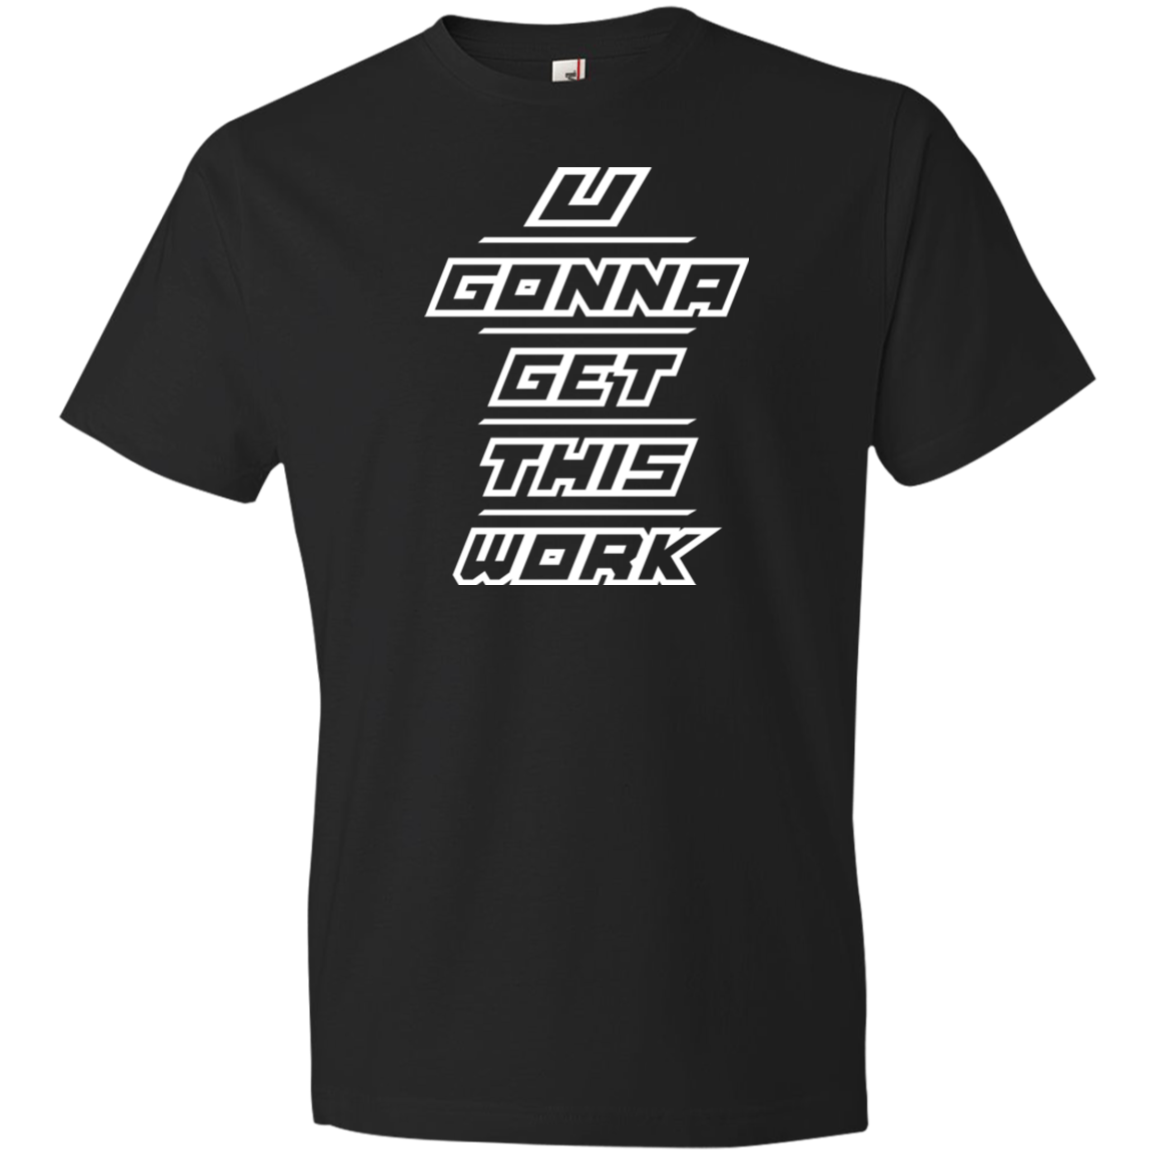 Get This Work Men's T-Shirt